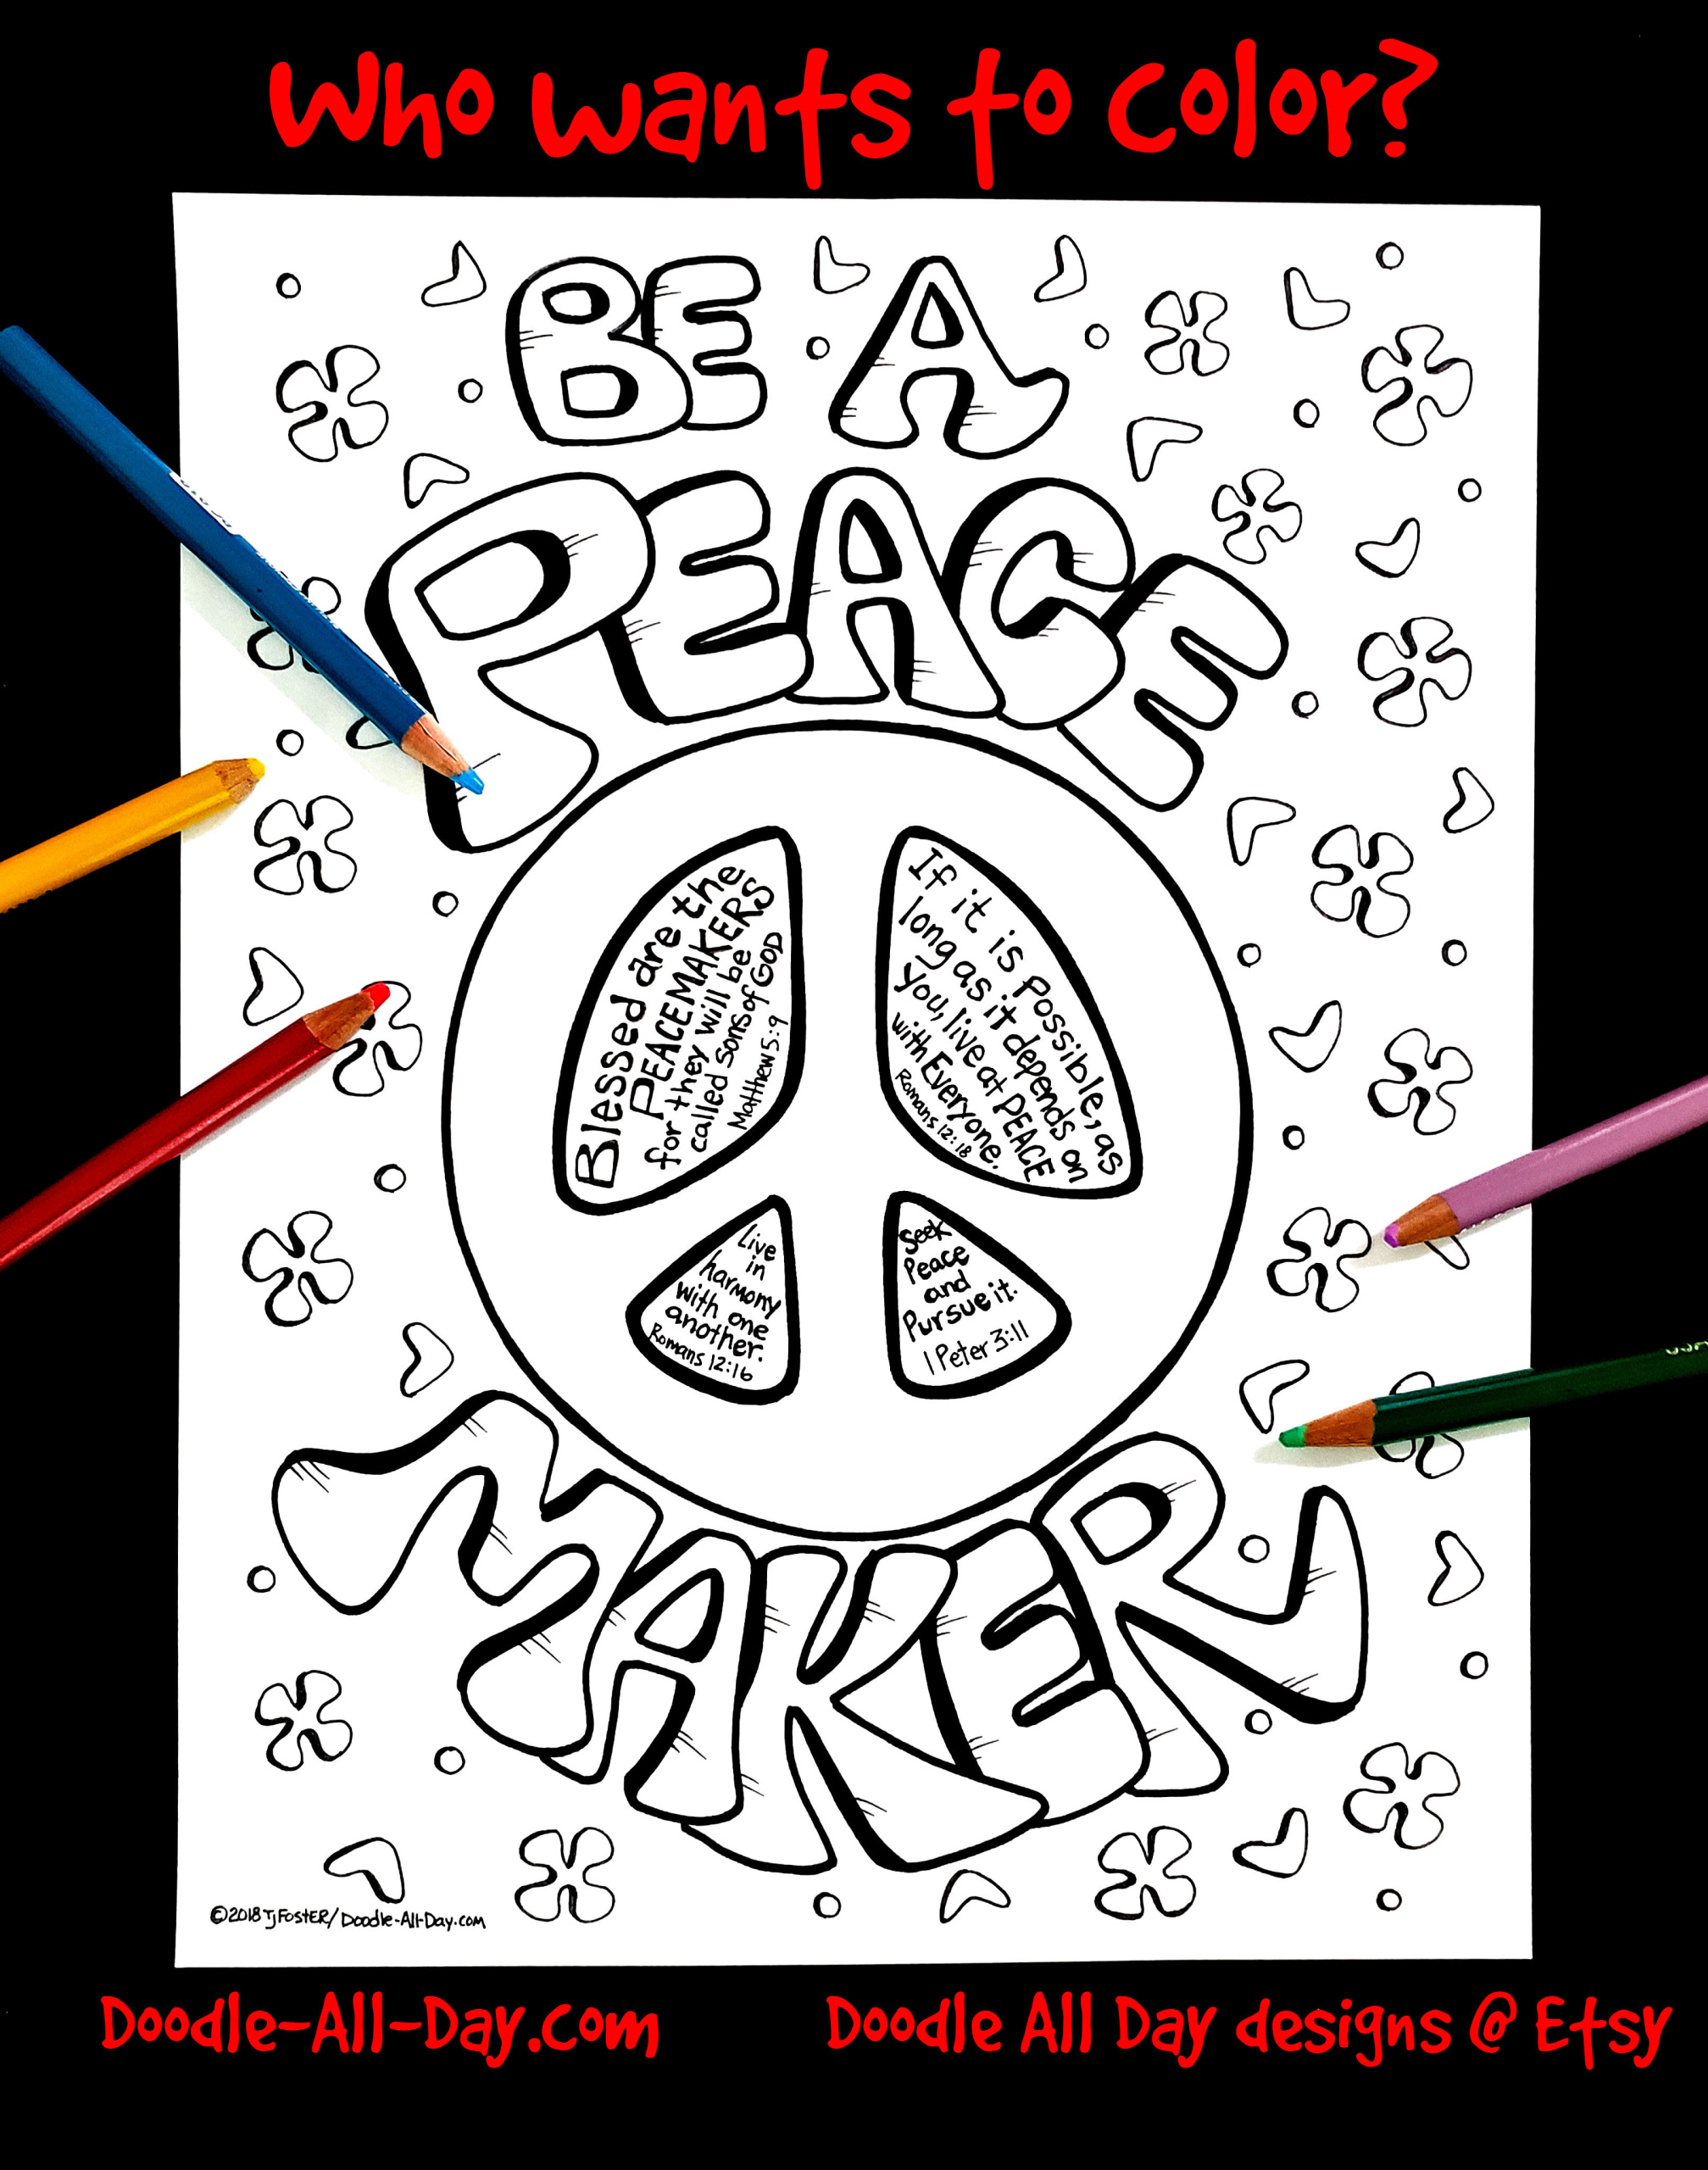 Be a Peace Maker